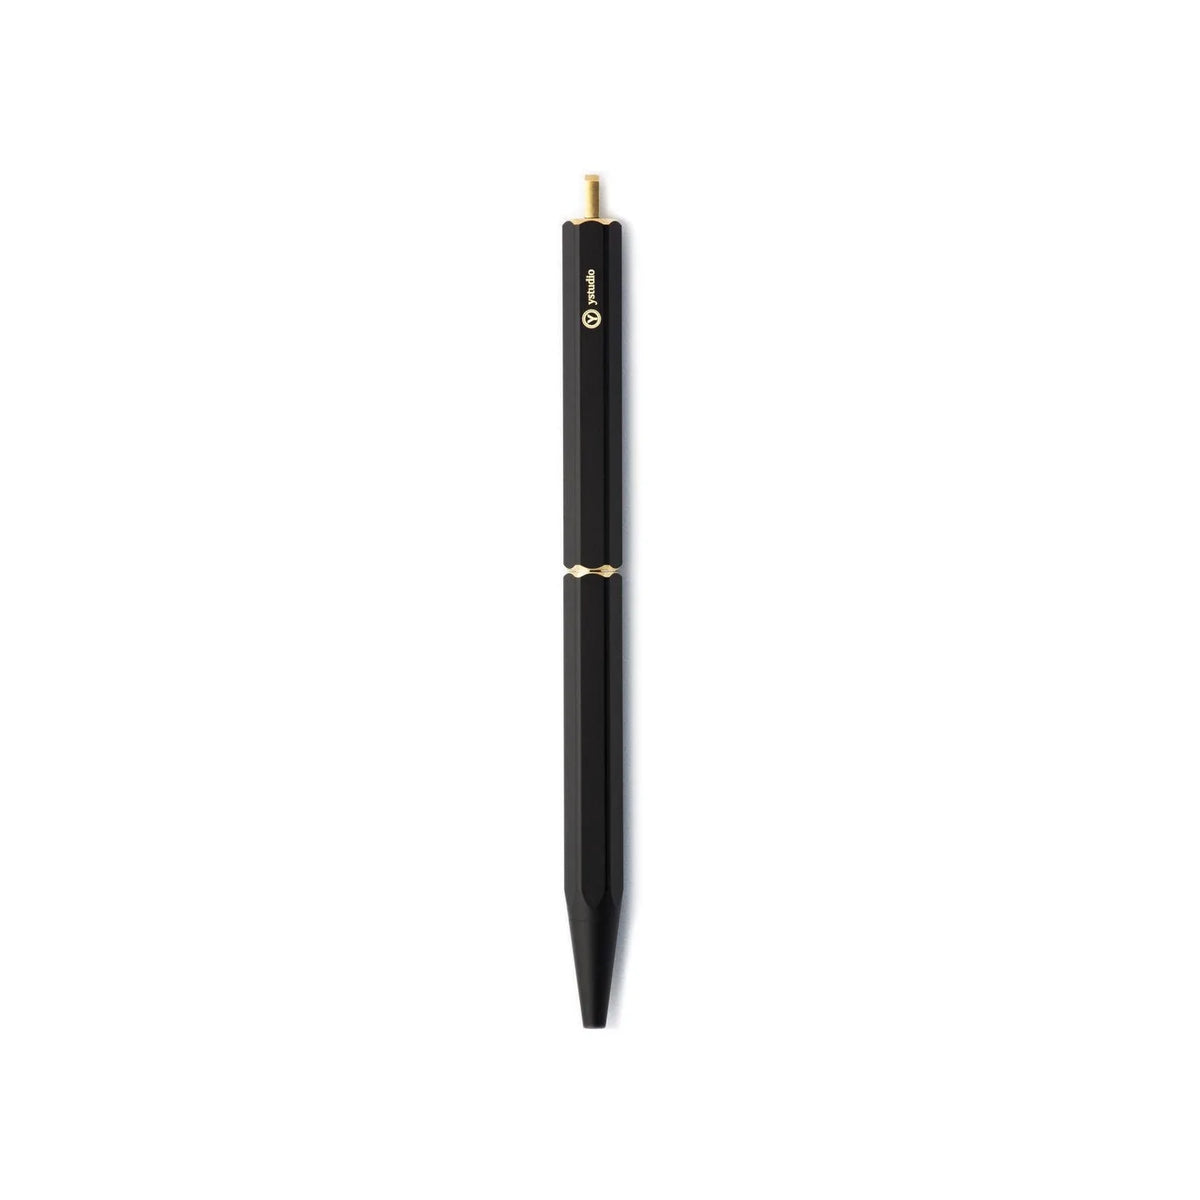 YSTUDIO Portable Ballpoint Pen